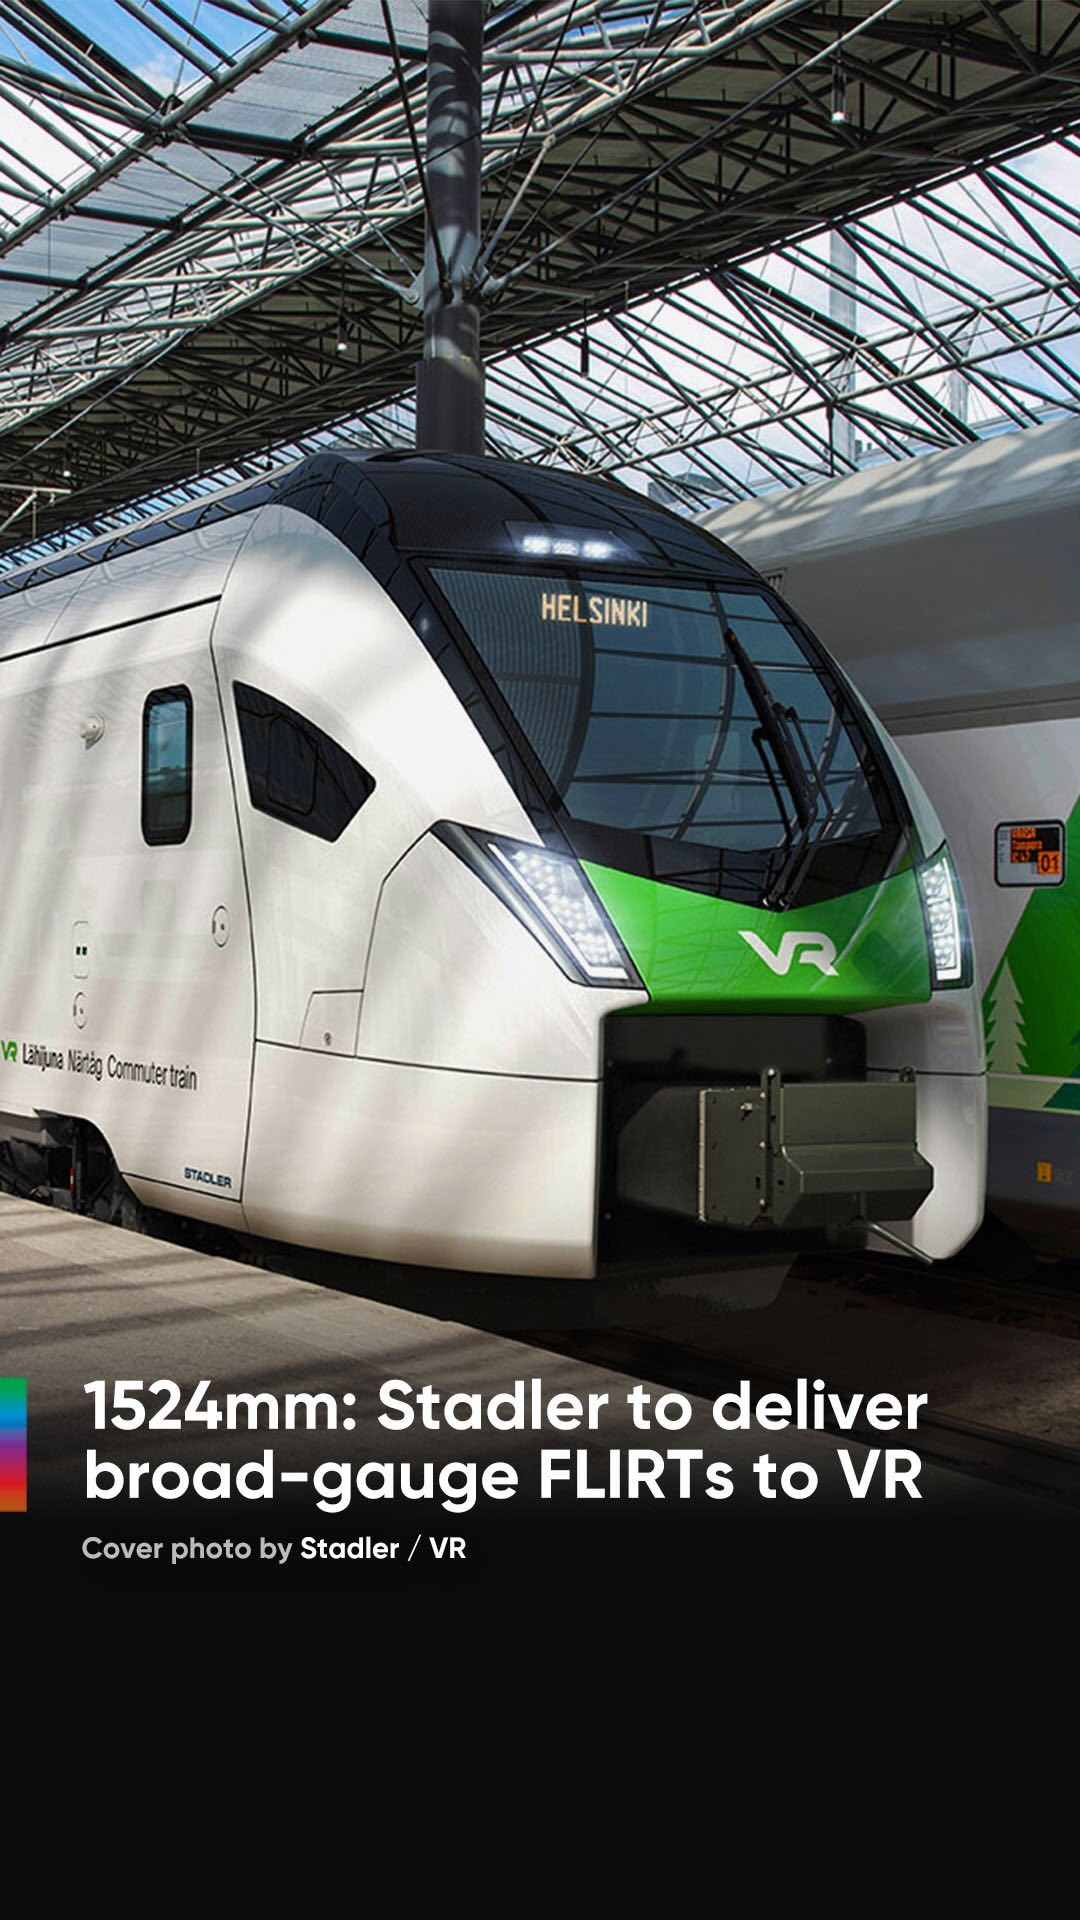 🎥 by Stadler / VR
🇫🇮 VR group has announced Stadler will deliver new broad-gauge FLIRTs from 2026 onward ⏩ Read more via the link our bio ⬆️
.
.
.
.
.
#VR #VRgroup #Stadlerrail #Stadlerflirt #passengertrains #Stadler #Electricmultipleunit #EMU #railways_of_our_world #render #railways #railways_europe #instarail #eisenbahn #trainreel #trainreels #railcolor #railcolornews